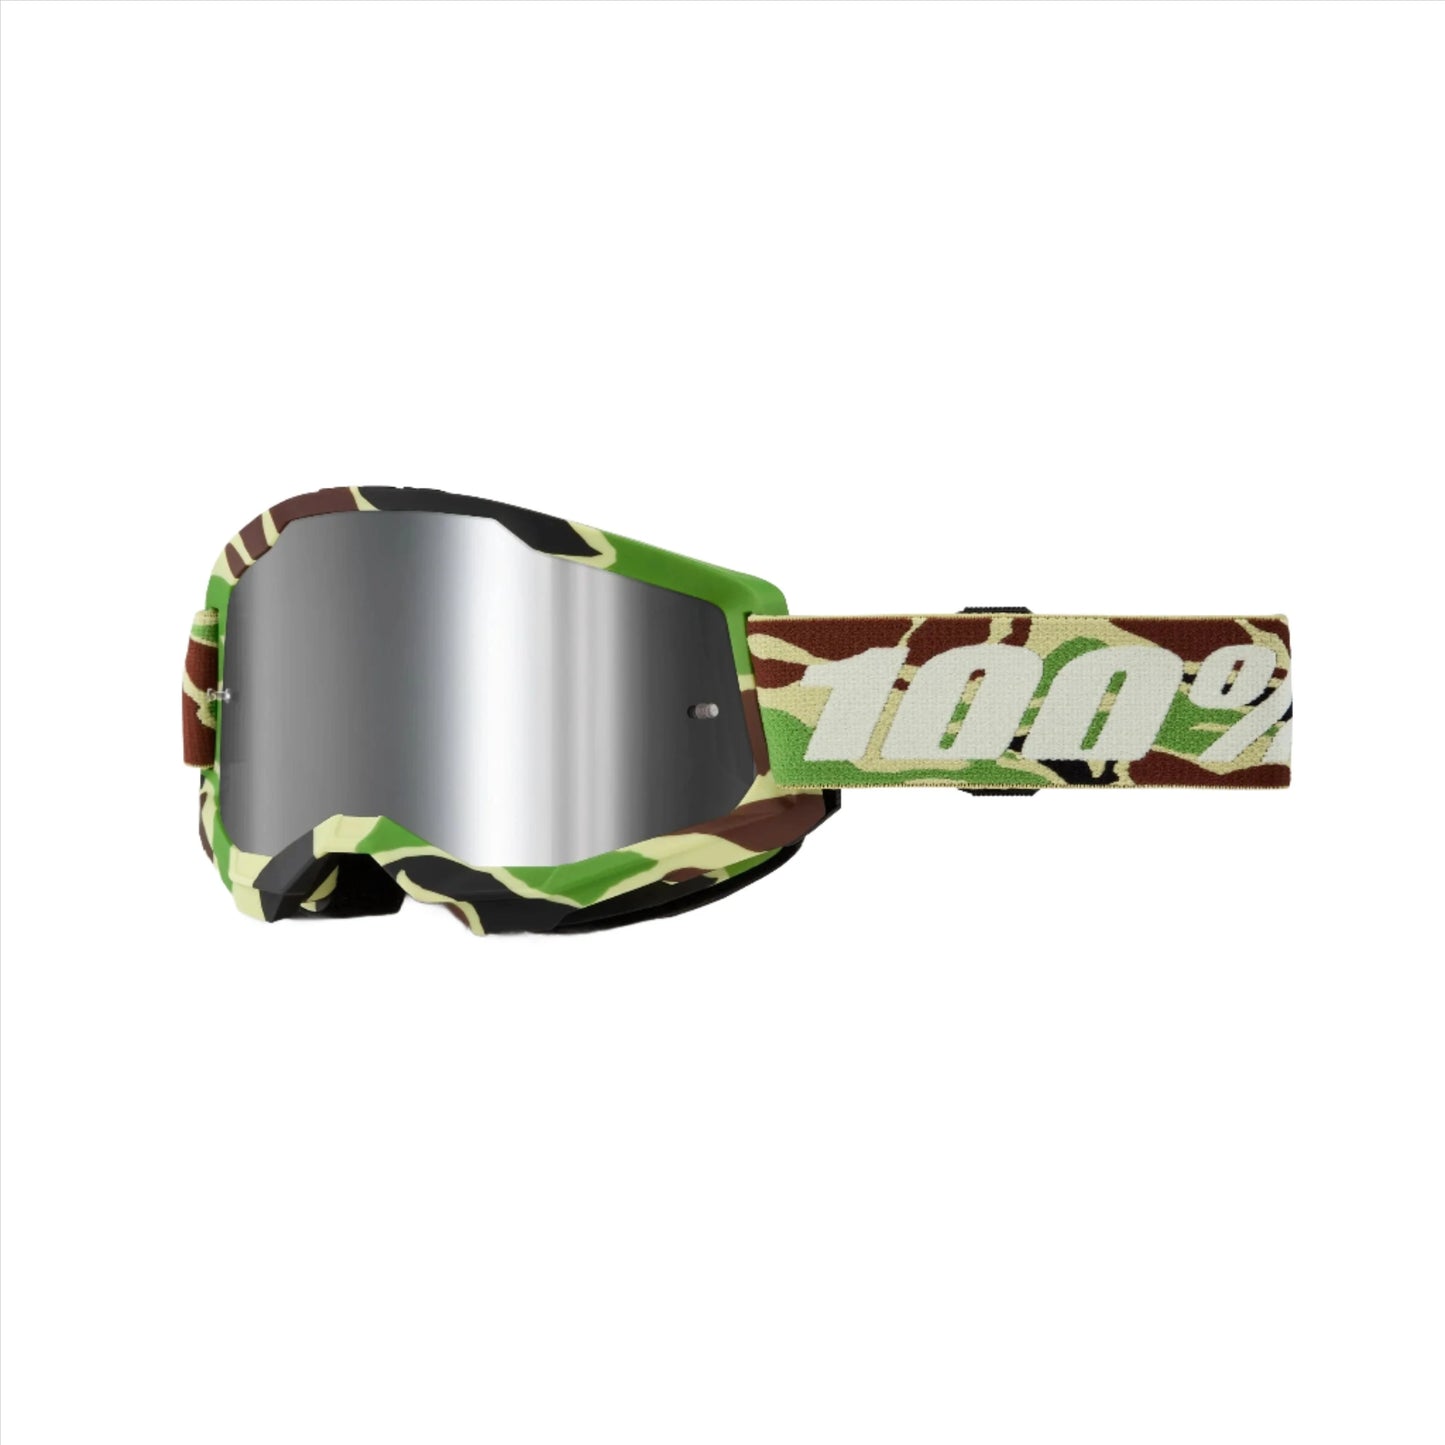 100 Percent Strata 2 Goggles - One Size Fits Most - War Camo - Mirror Silver Lens